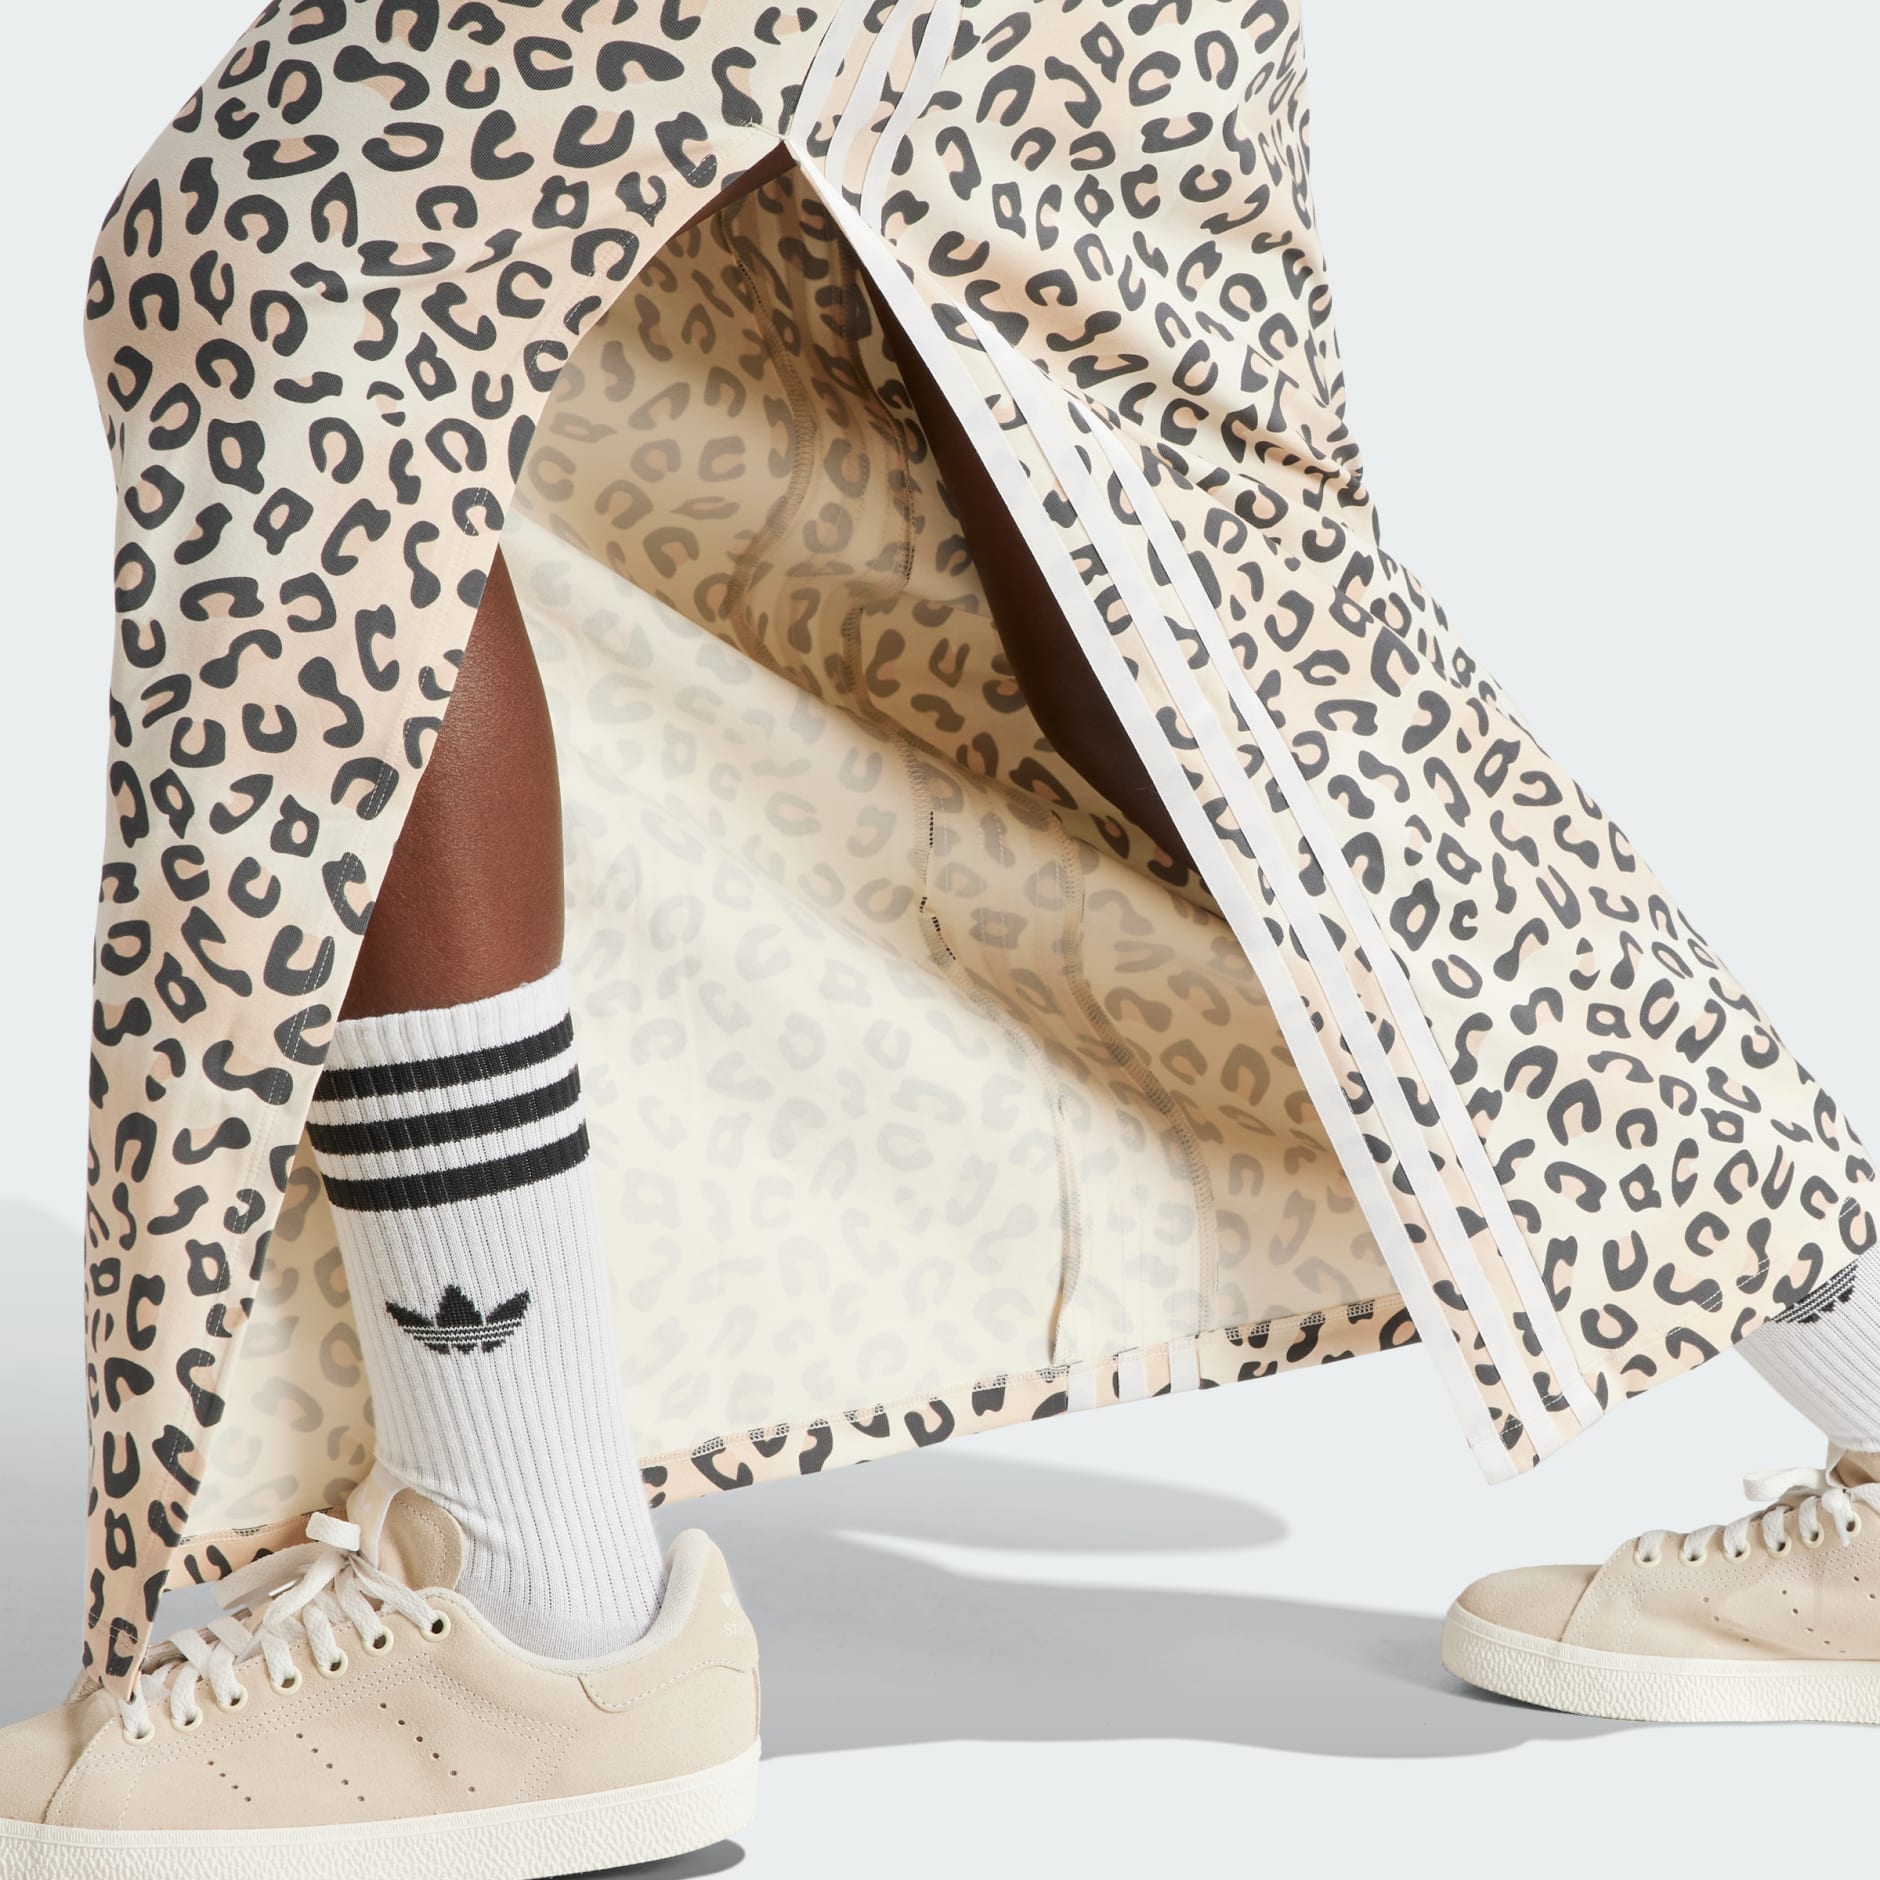 Clothing - adidas Originals Leopard Luxe 3-Stripes Maxi Dress - White